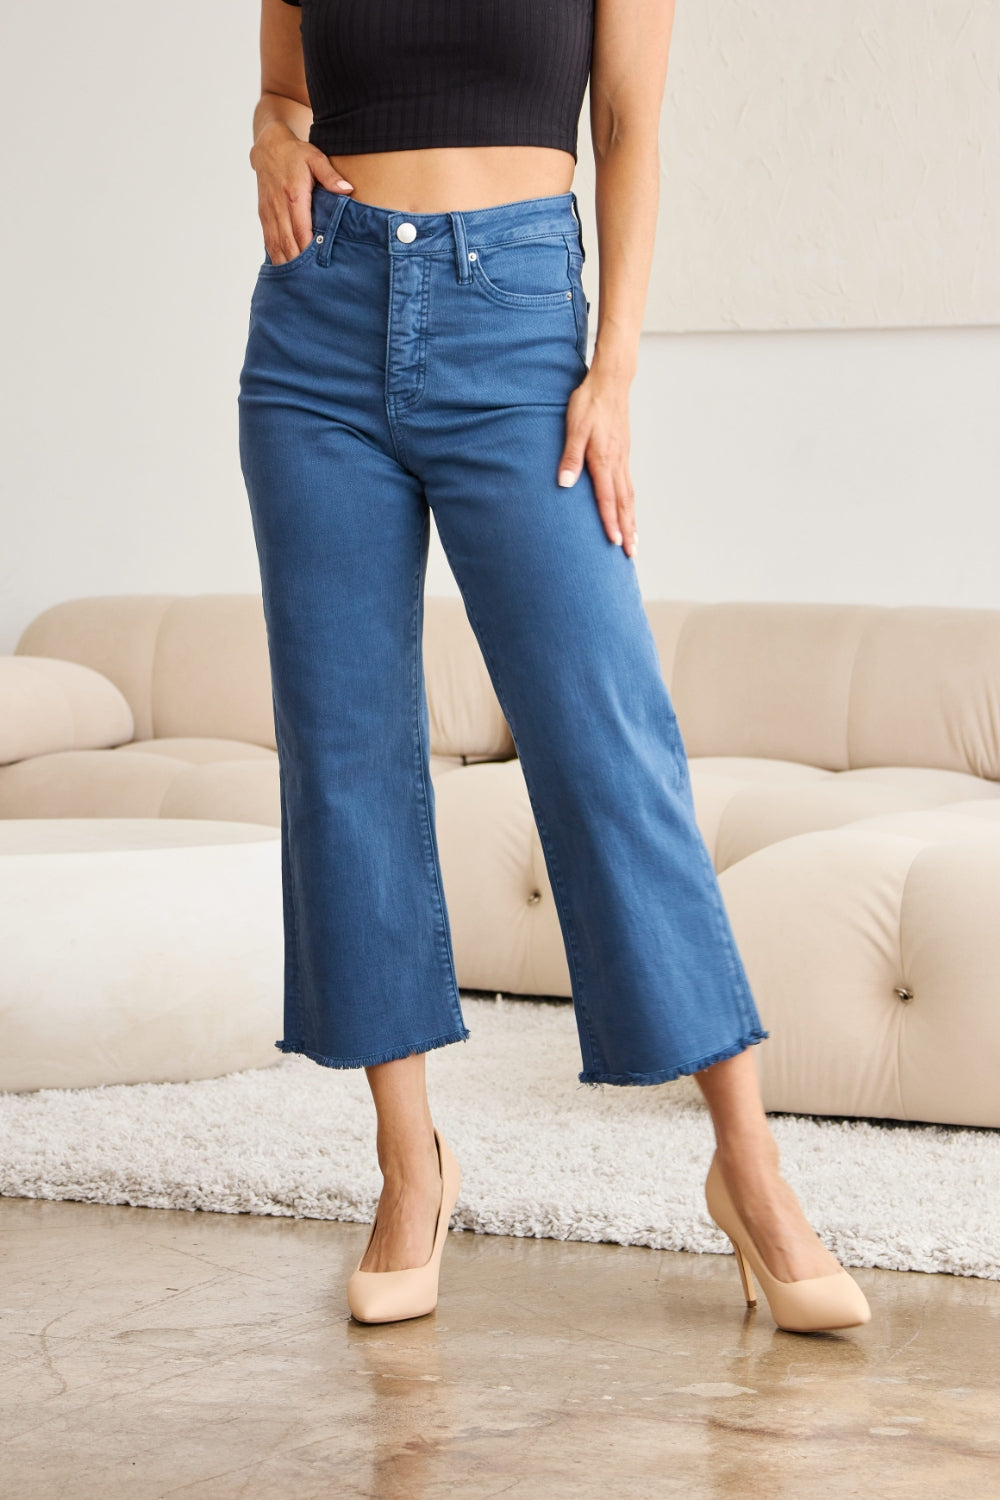 RFM Jeans - Blue Slate Wide Leg Cropped Jeans - Inspired Eye Boutique